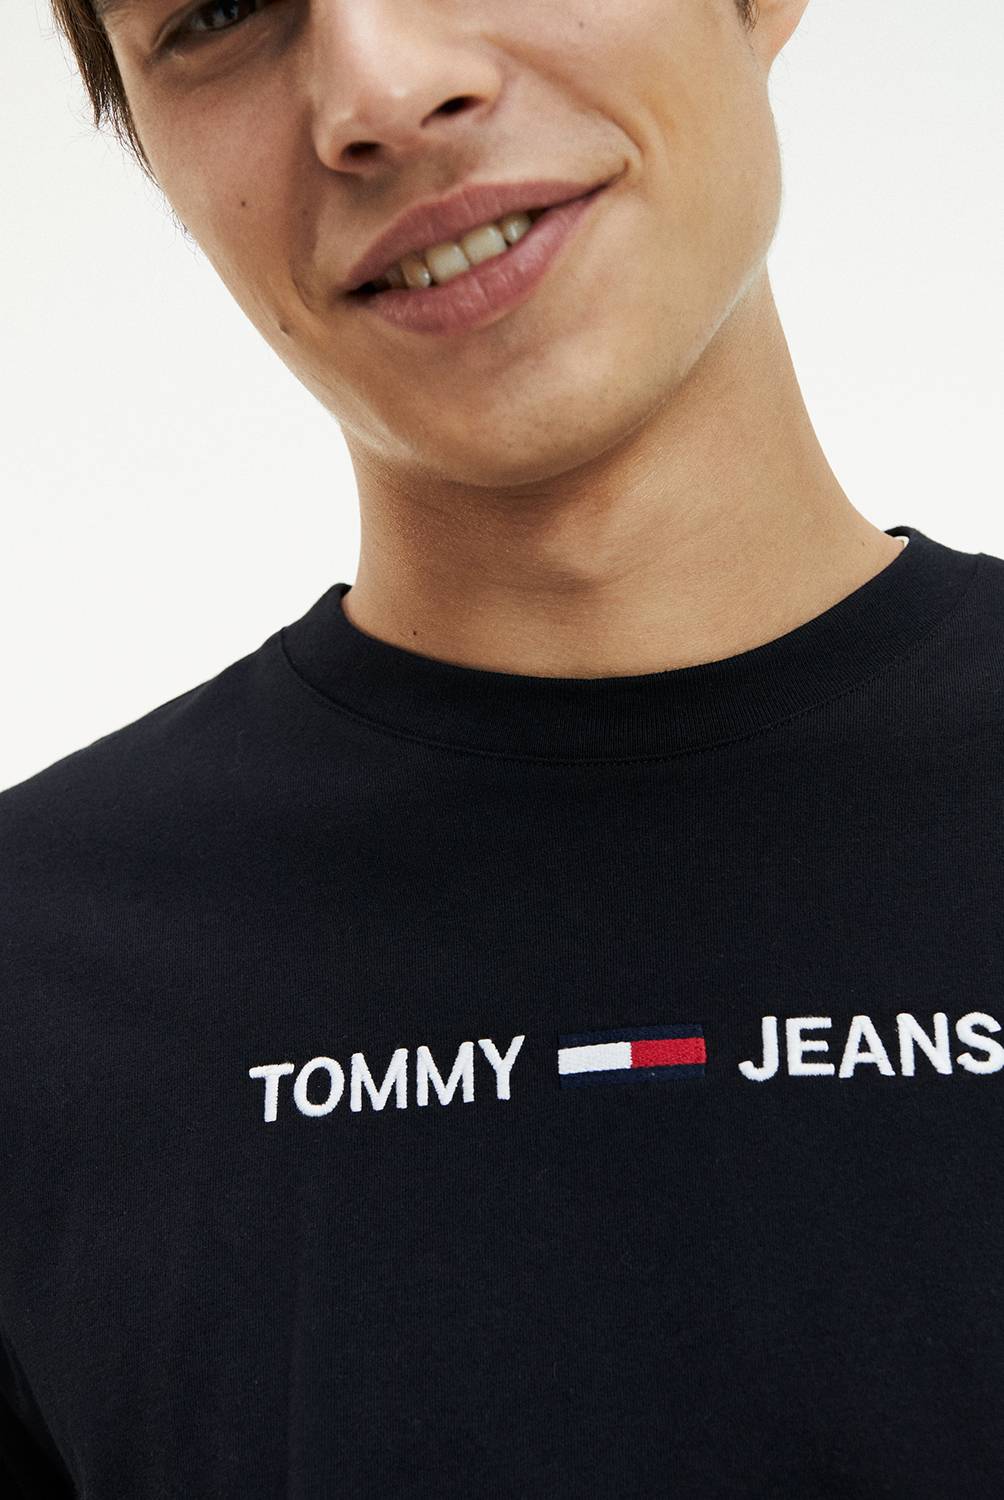 TOMMY JEANS - Polera Tjm Small Logo Tee